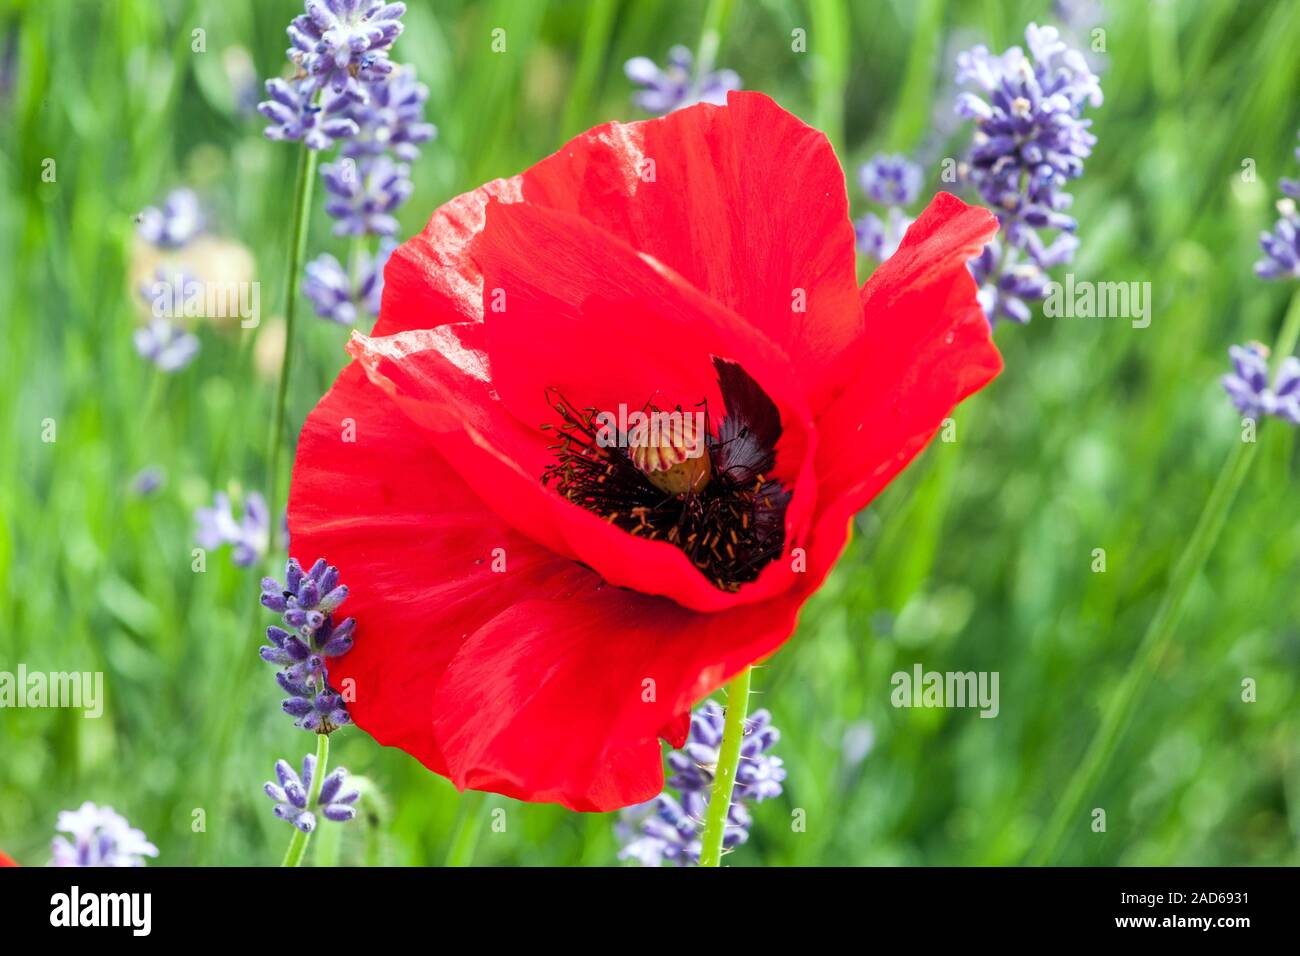 Red papaver field poppy lavender Stock Photo